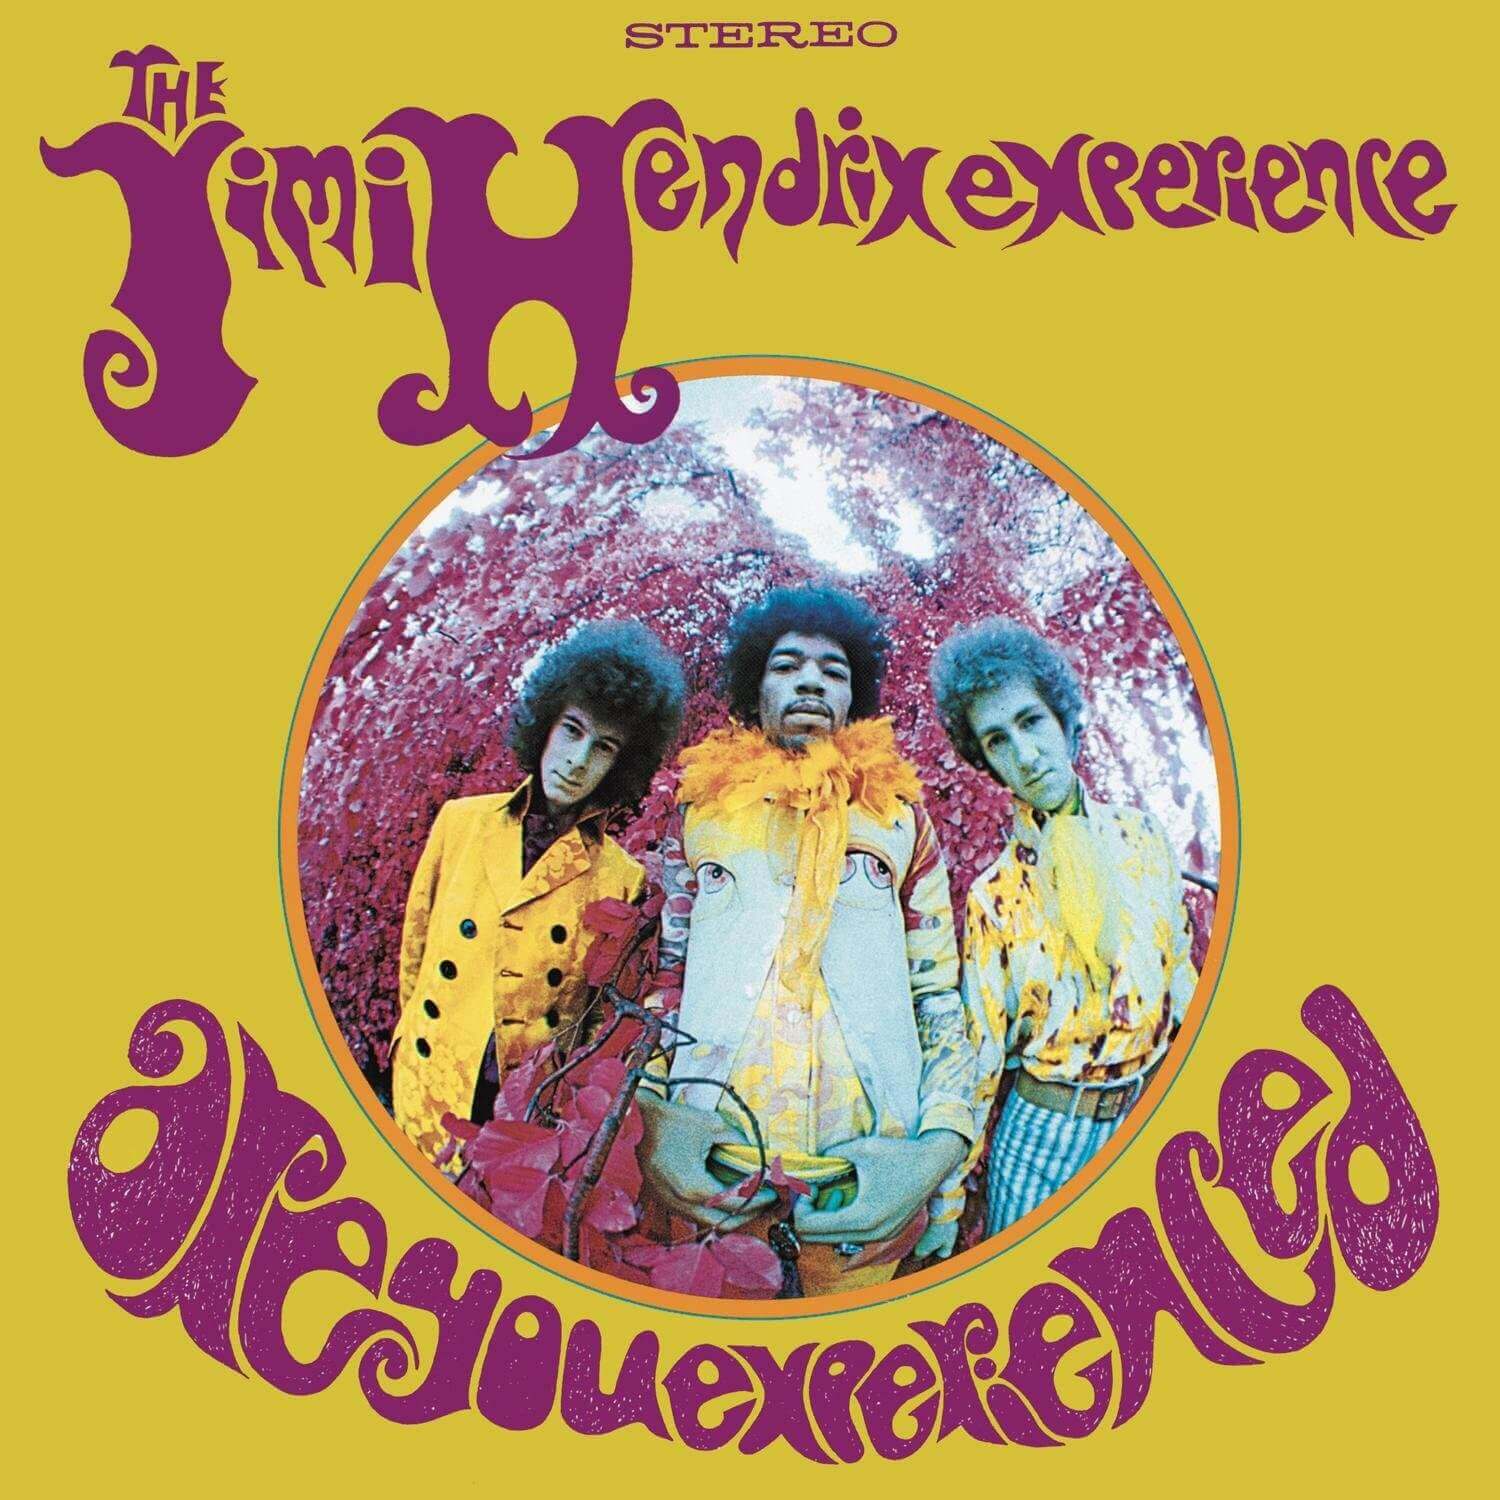 What is Fisheye Lens - Jimmy Hendrix Album Cover